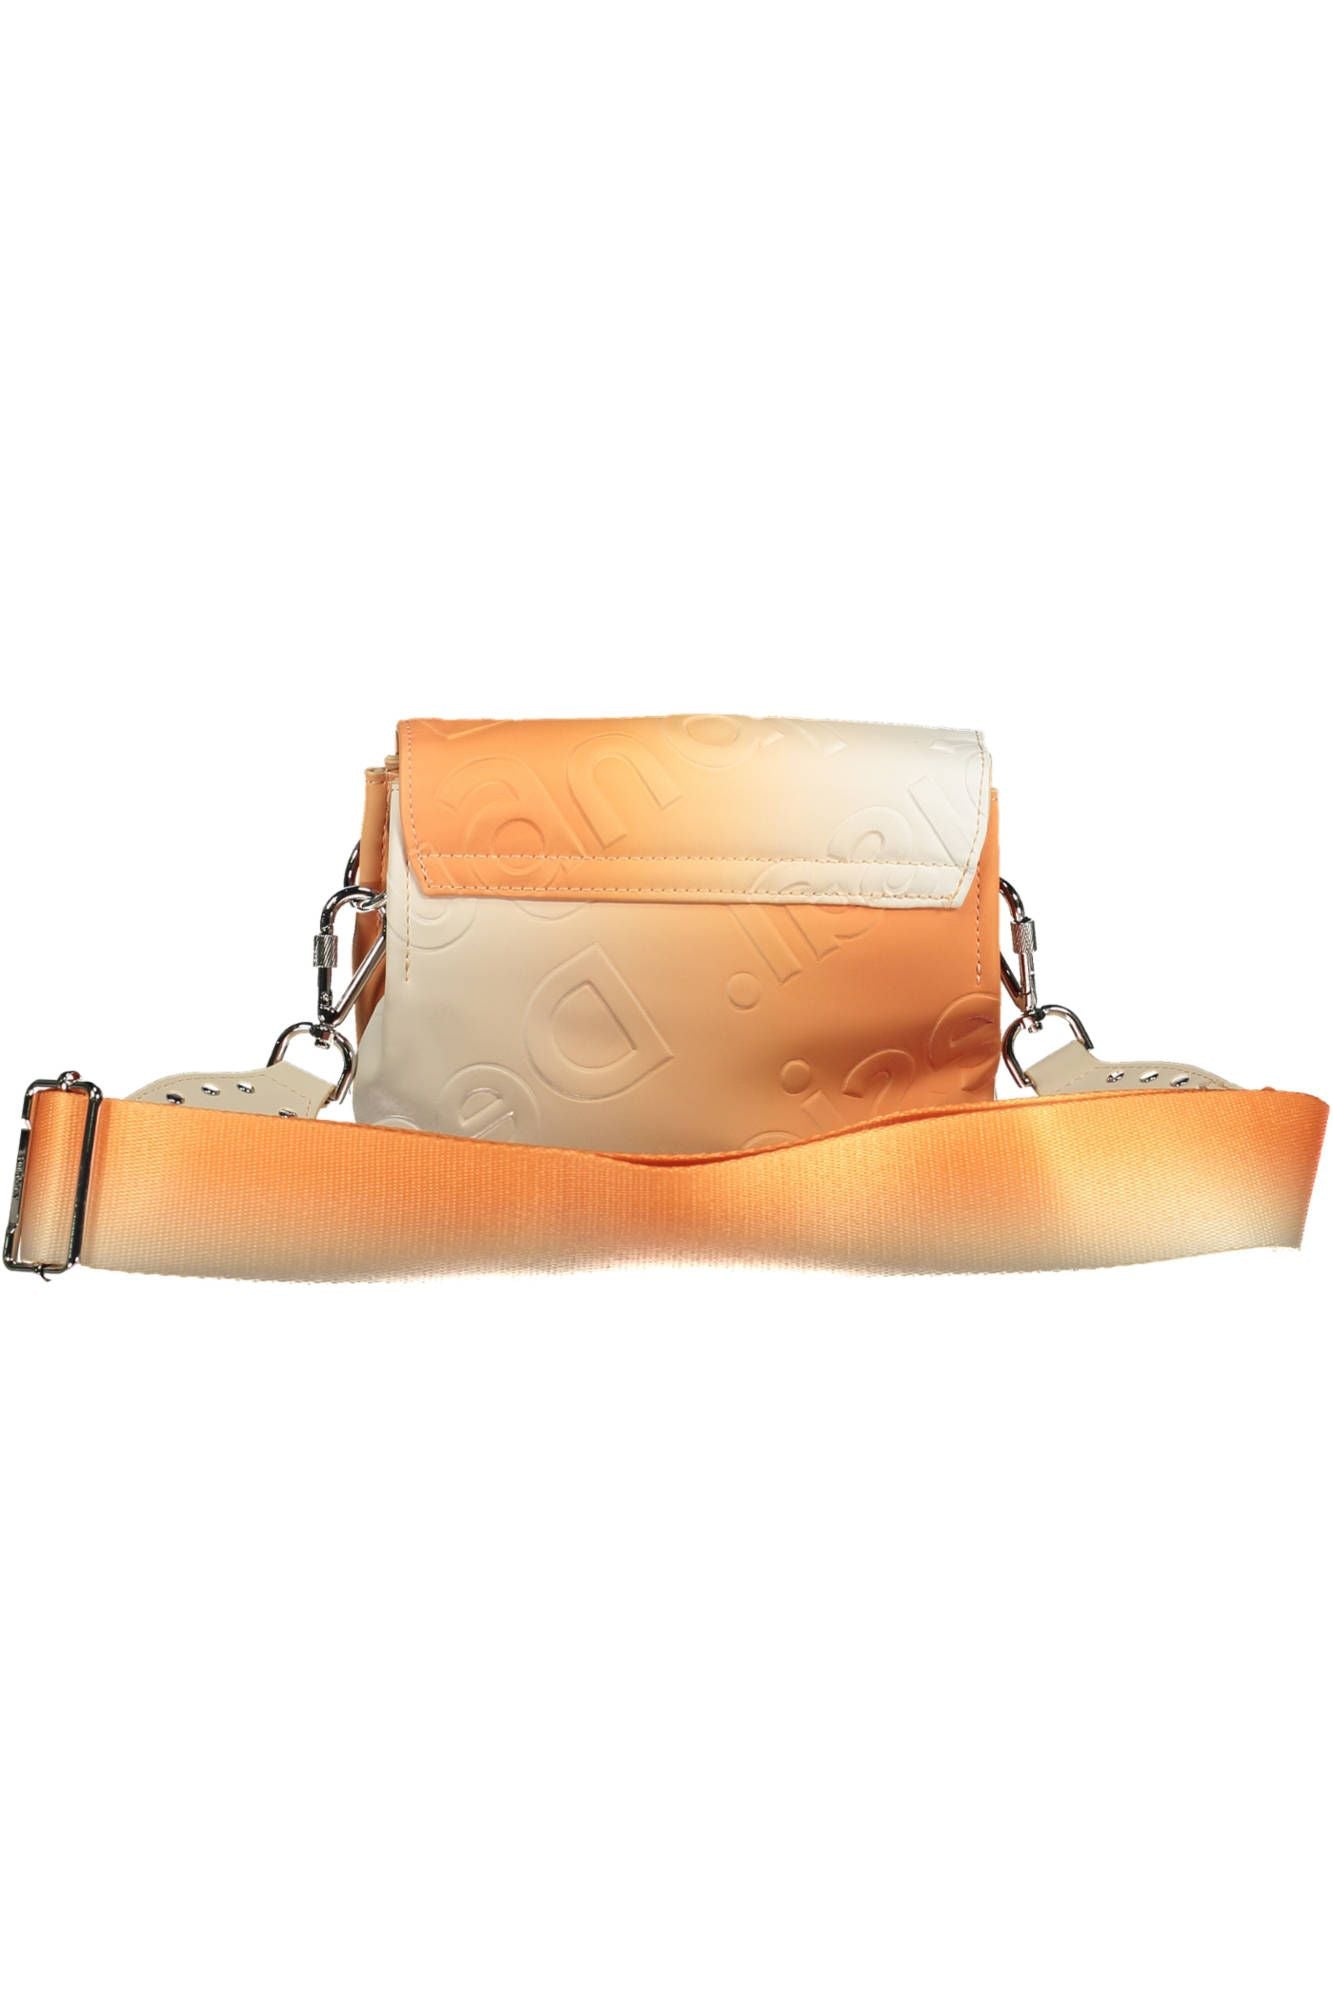 Chic Orange Contrast Detail Handbag